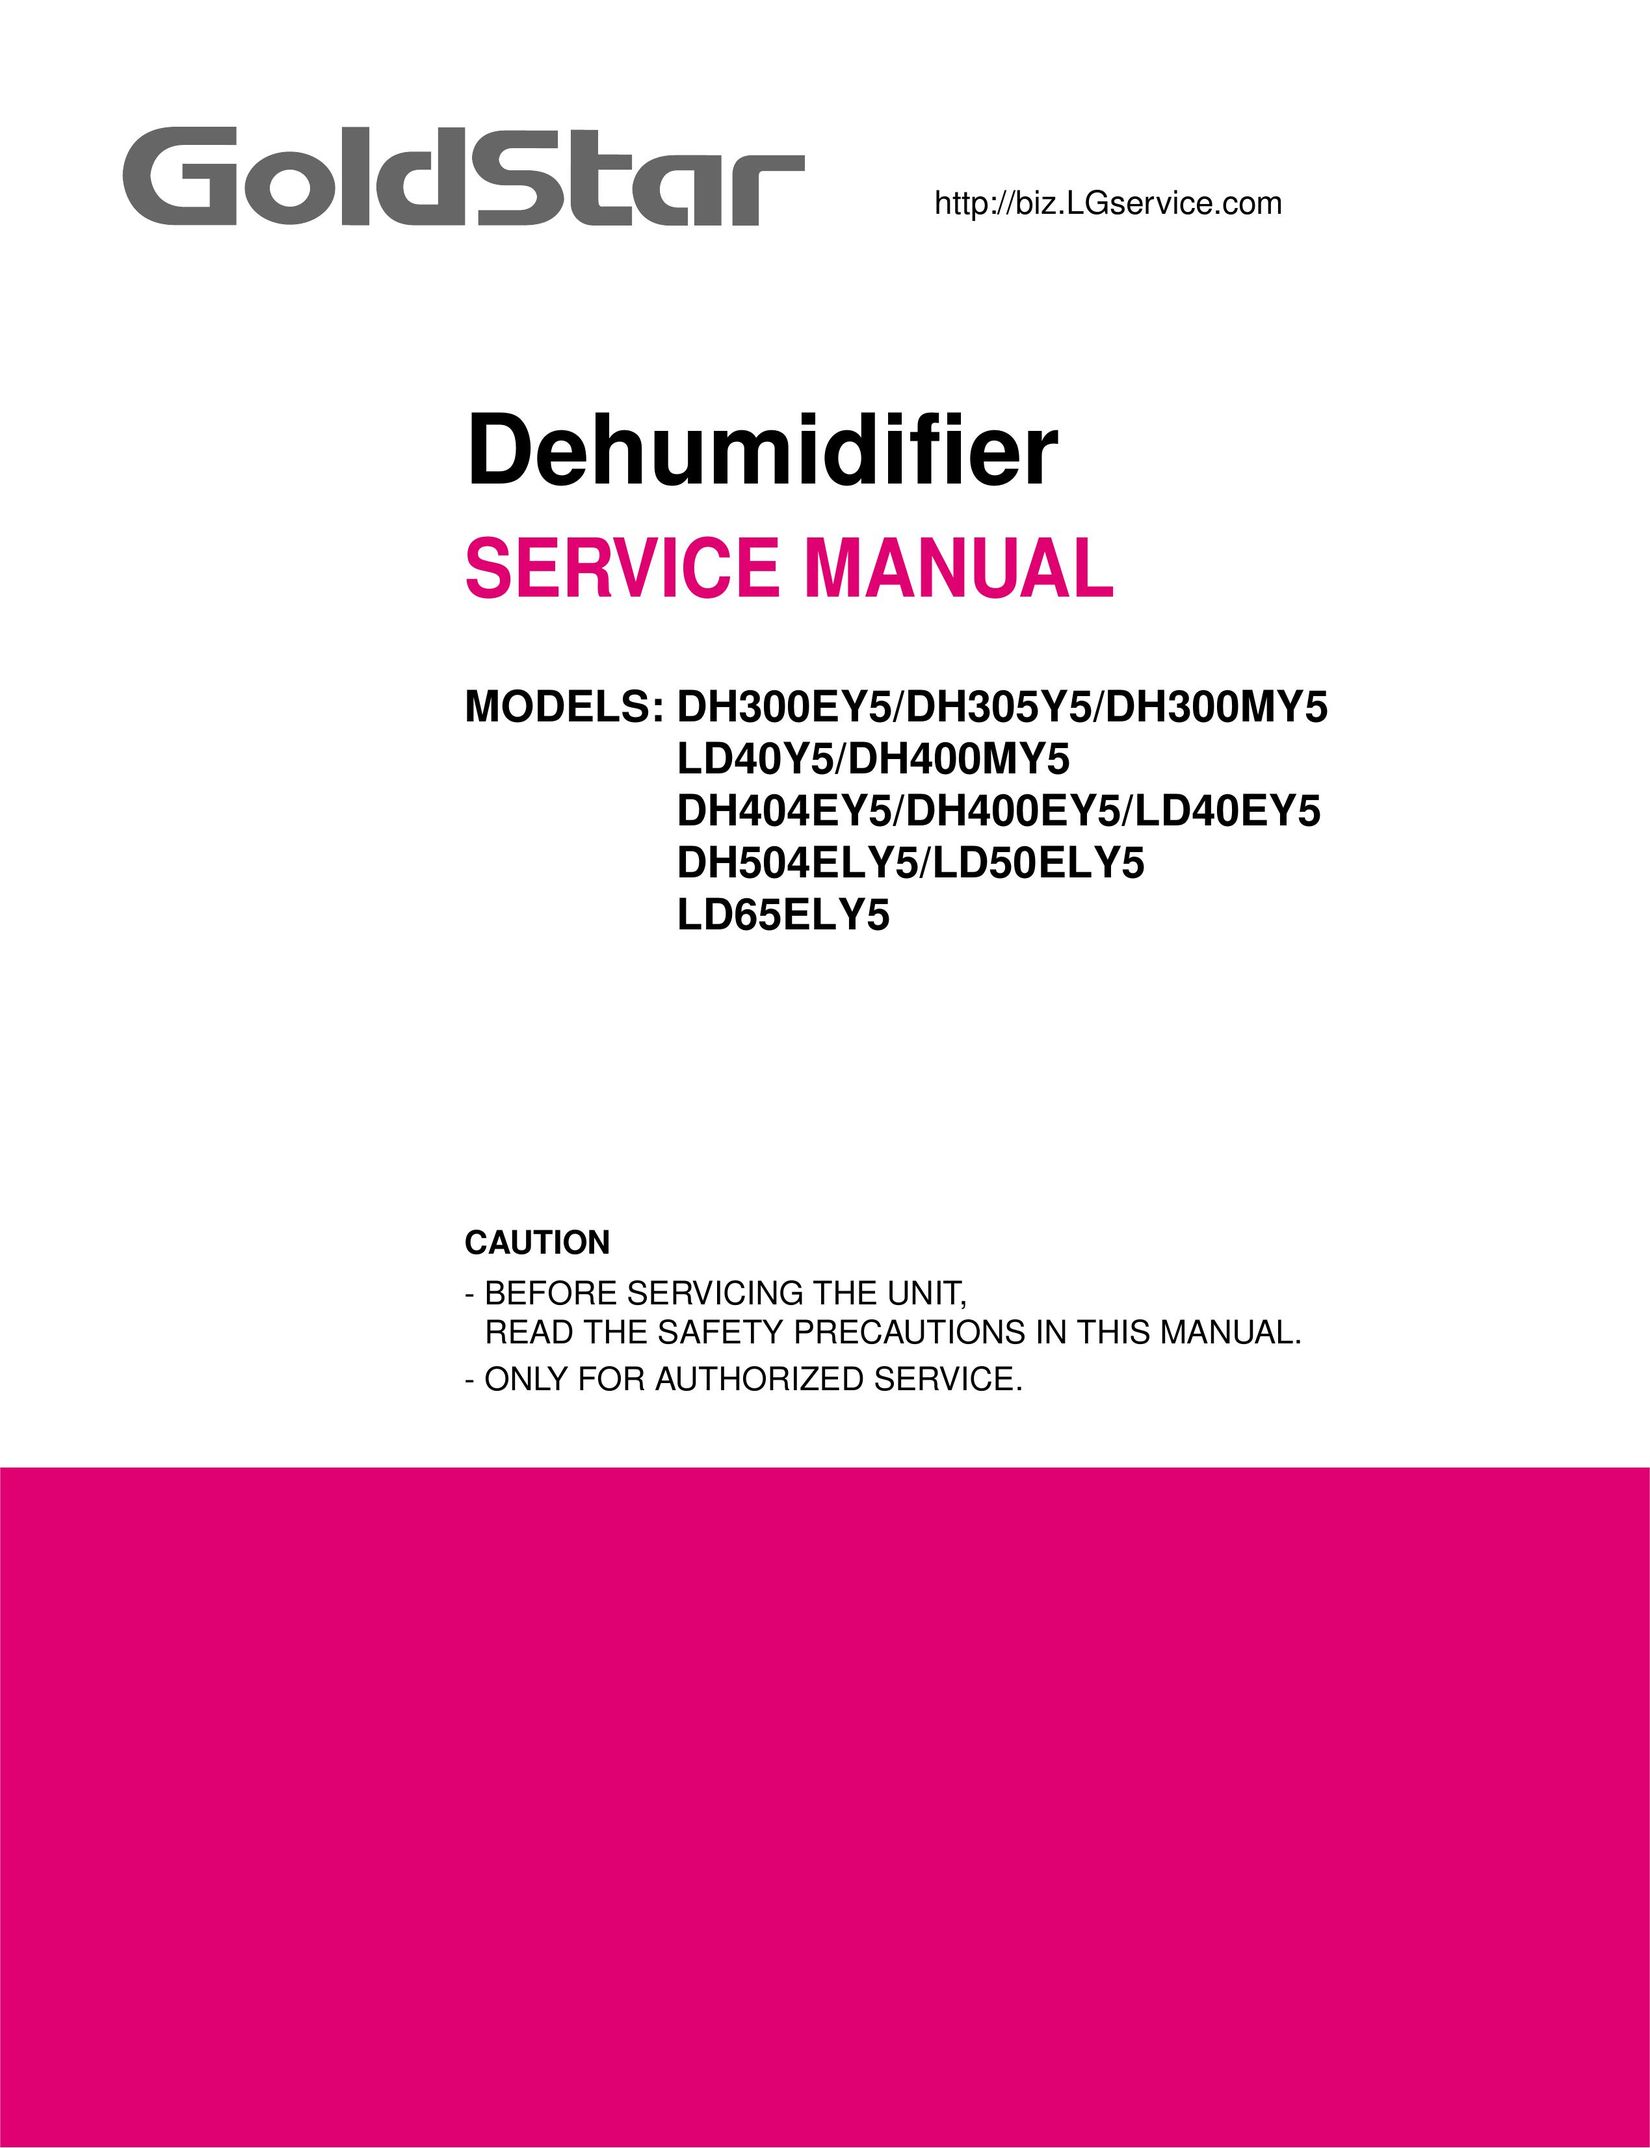 Frigidaire DH300MY5 Dehumidifier User Manual